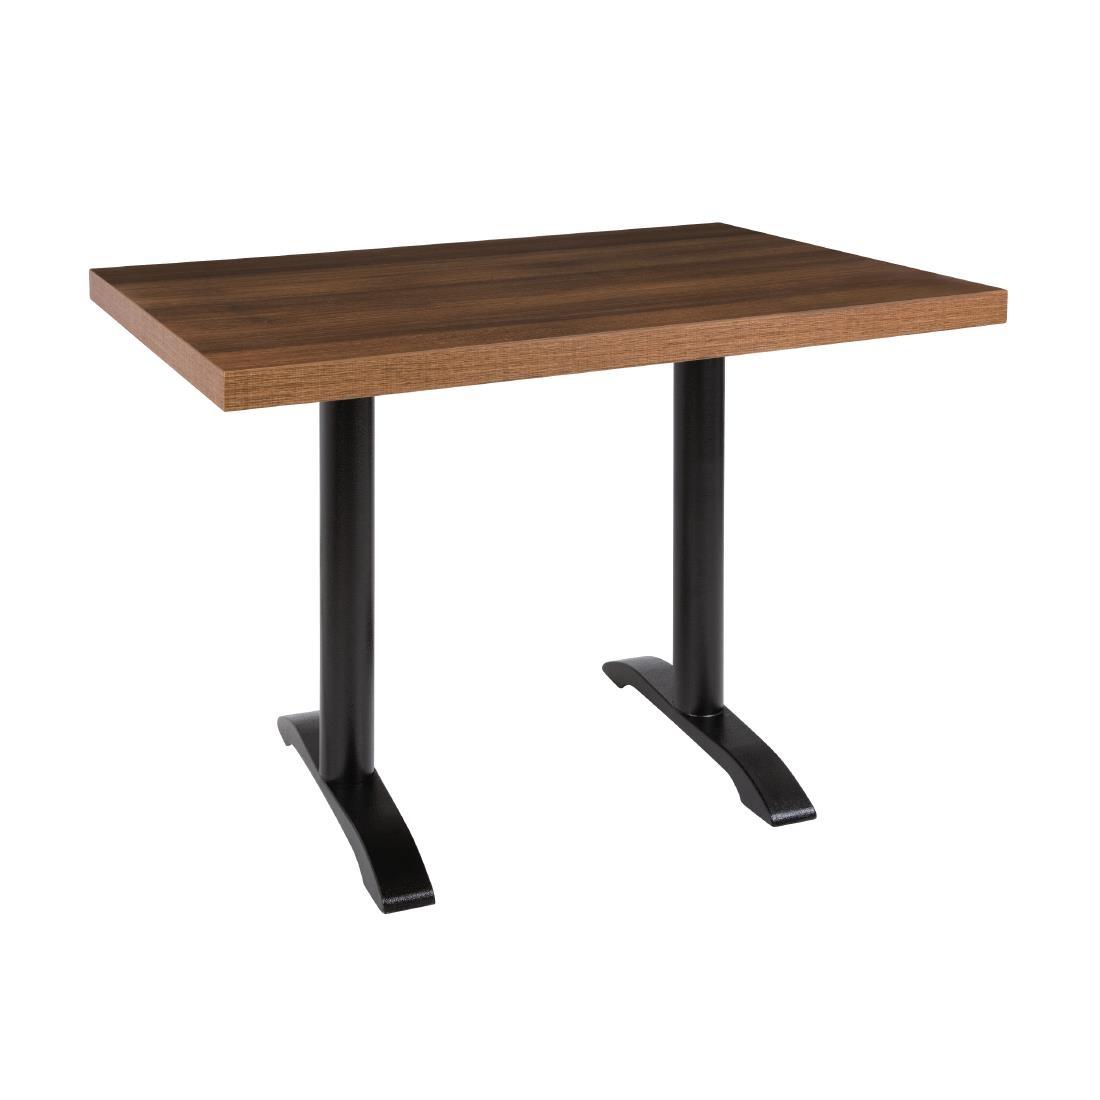 Bolero Pre-drilled Rectangular Table Top Rustic Oak 1100(W) x 700(D)mm - DT442  - 7